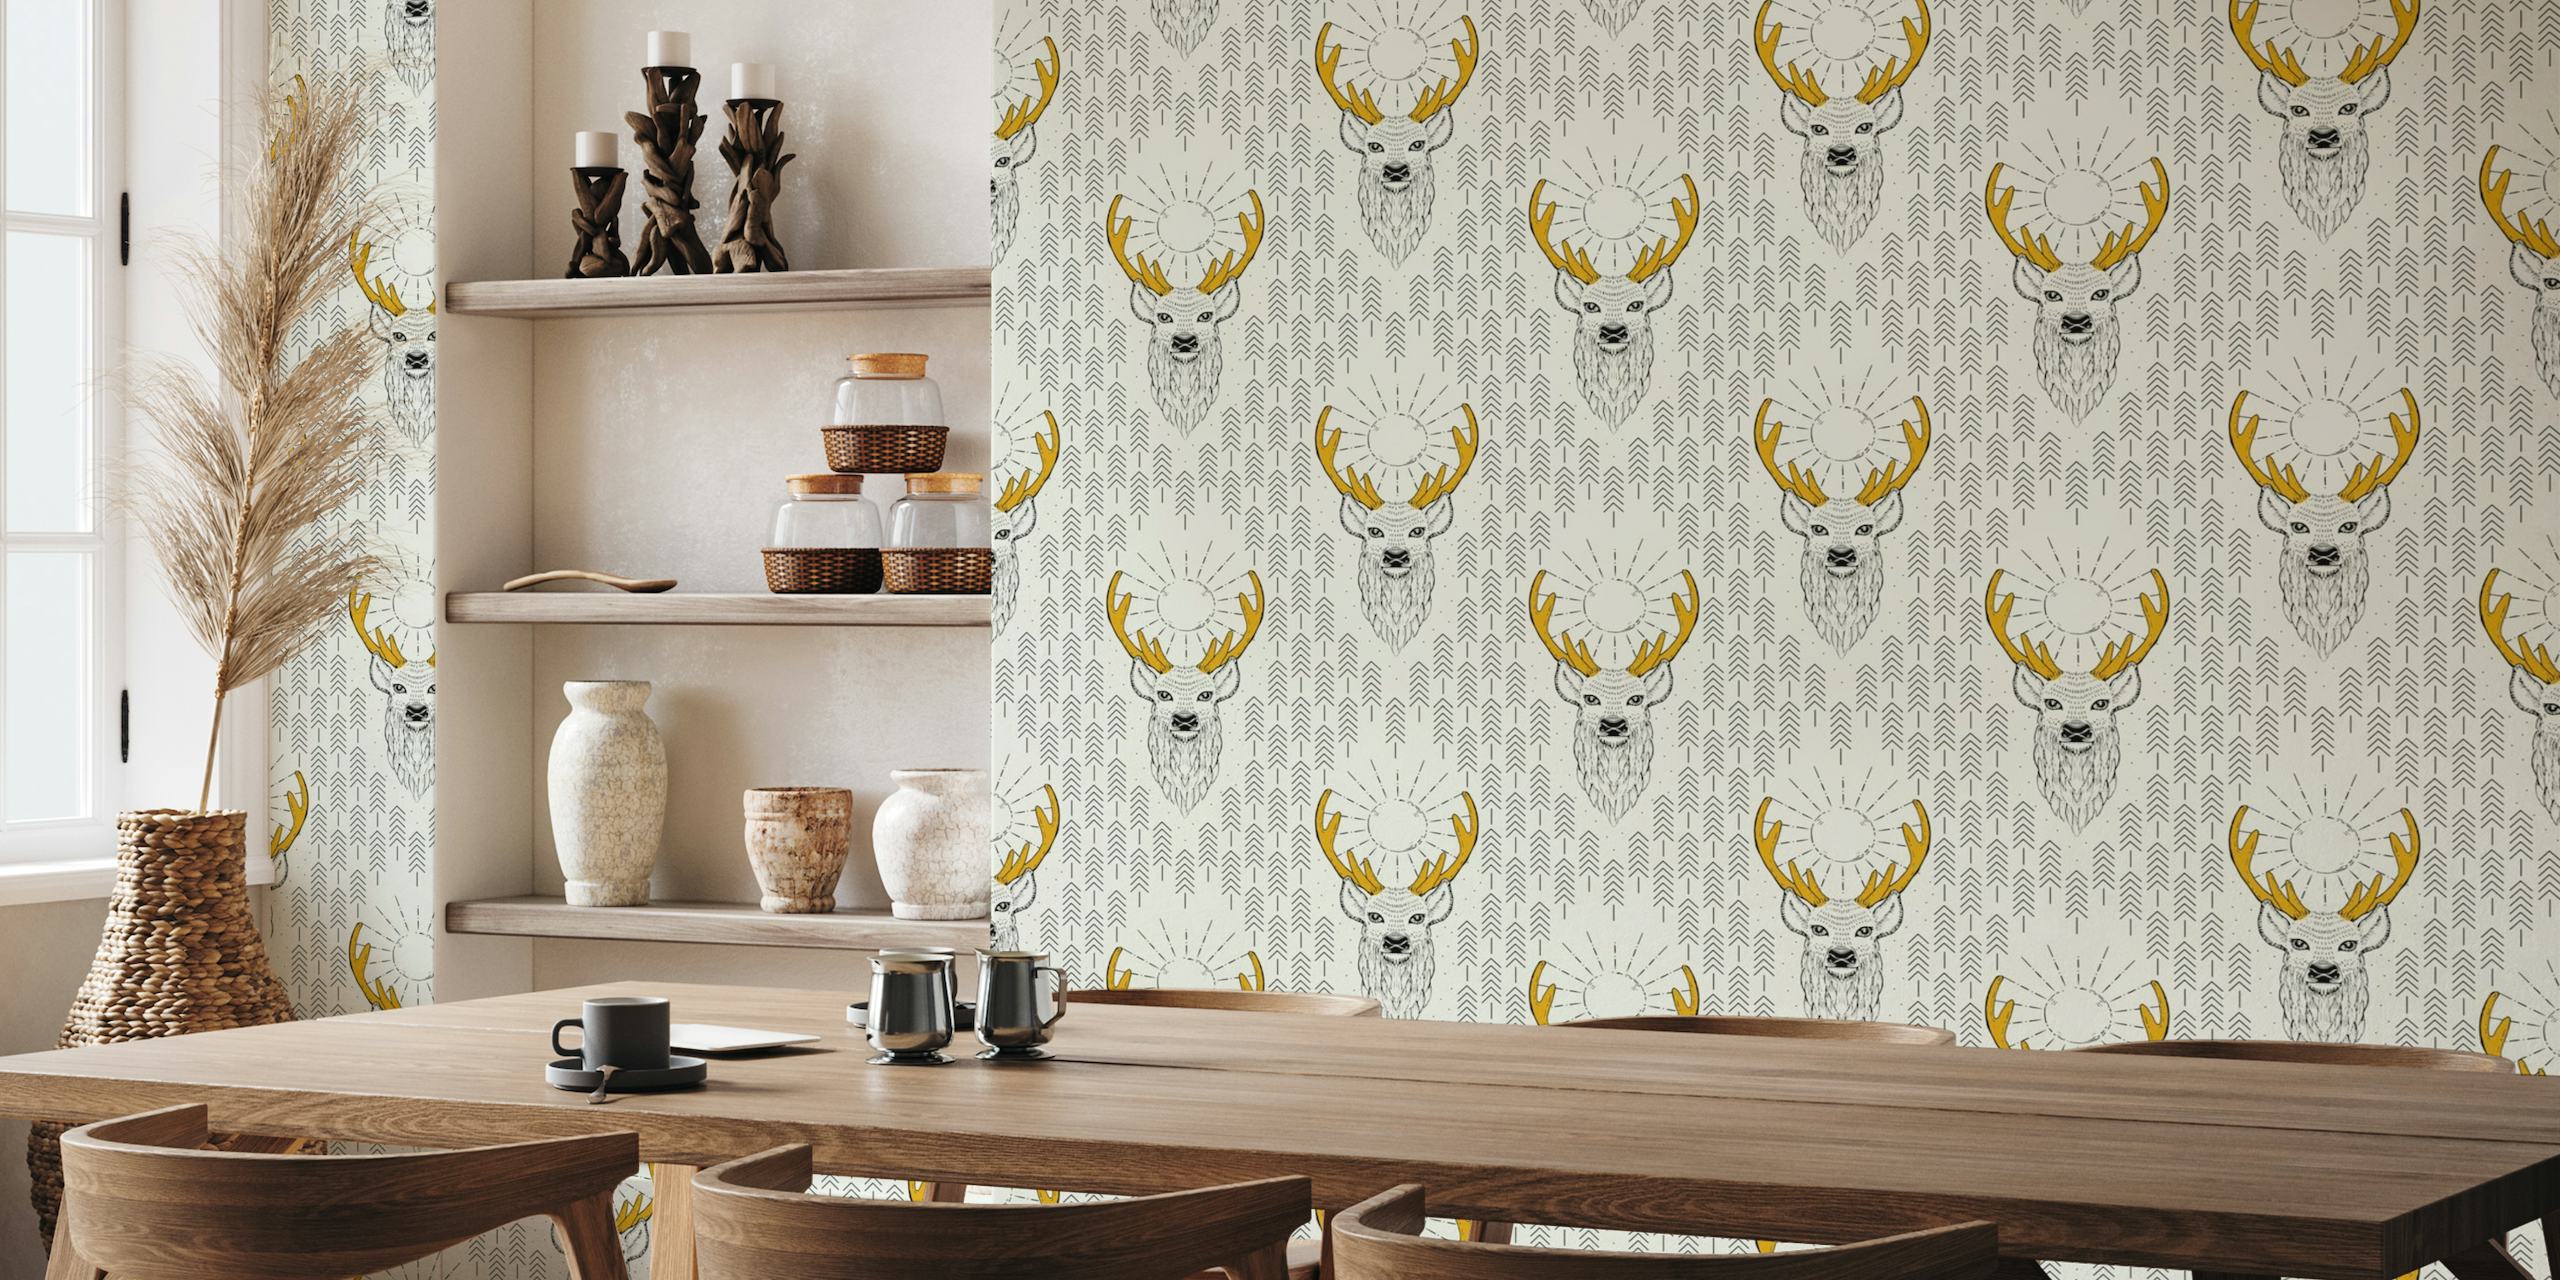 Deer with golden horns - black and white wallpaper